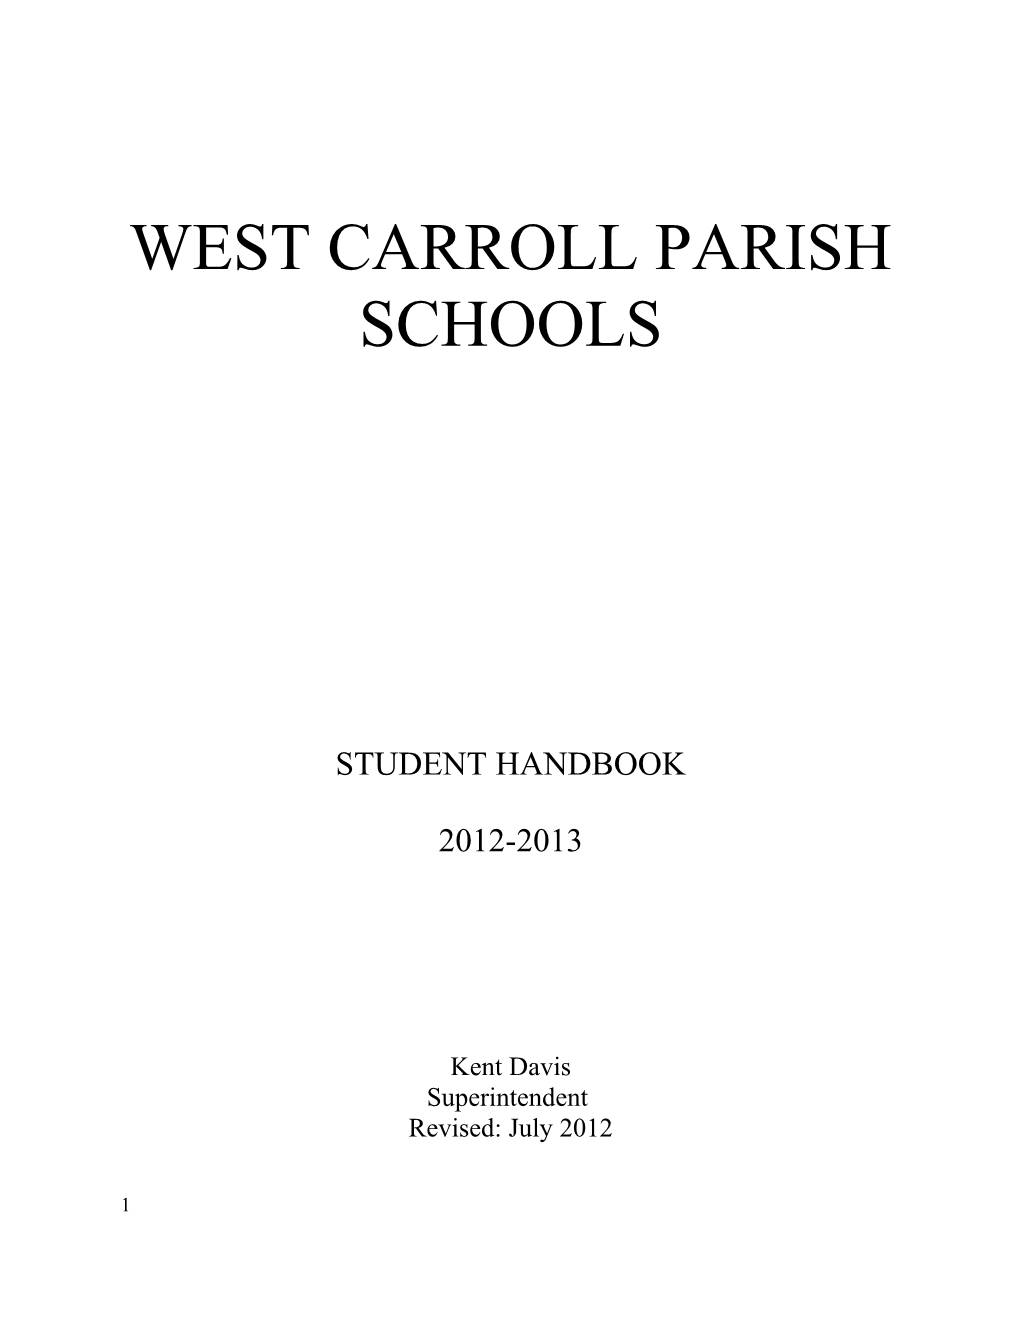 Philosophy of the West Carroll Parish School Board